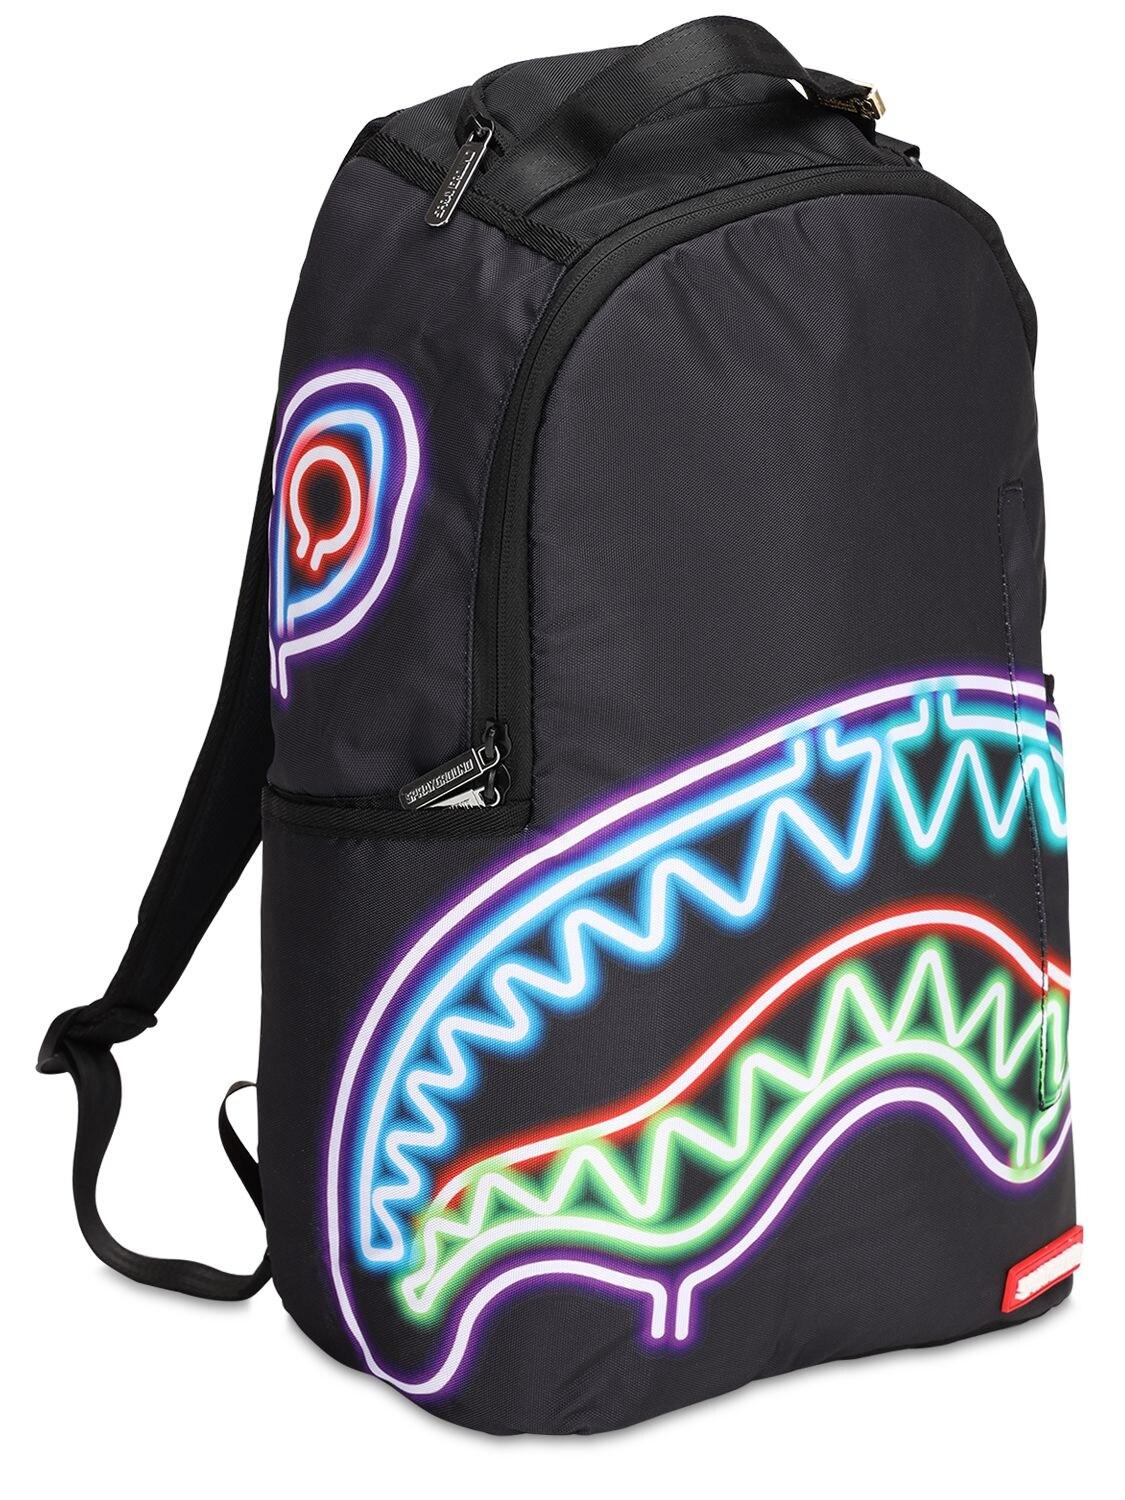 Neon Sprayground Backpack | vlr.eng.br